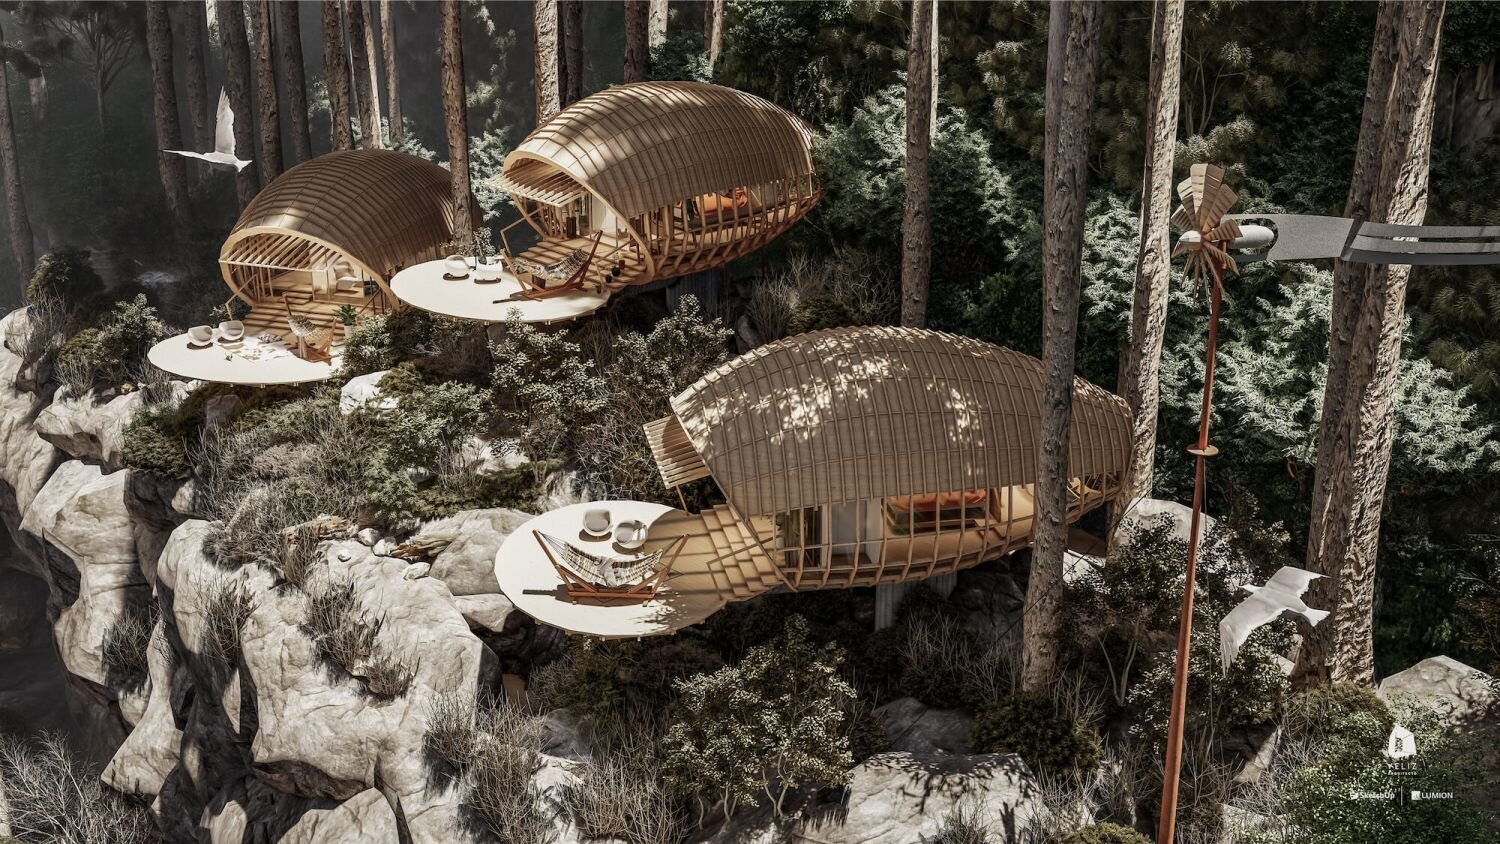 veliz arquitecto Visual Atelier 8 Cabins on the mountain 6.jpg